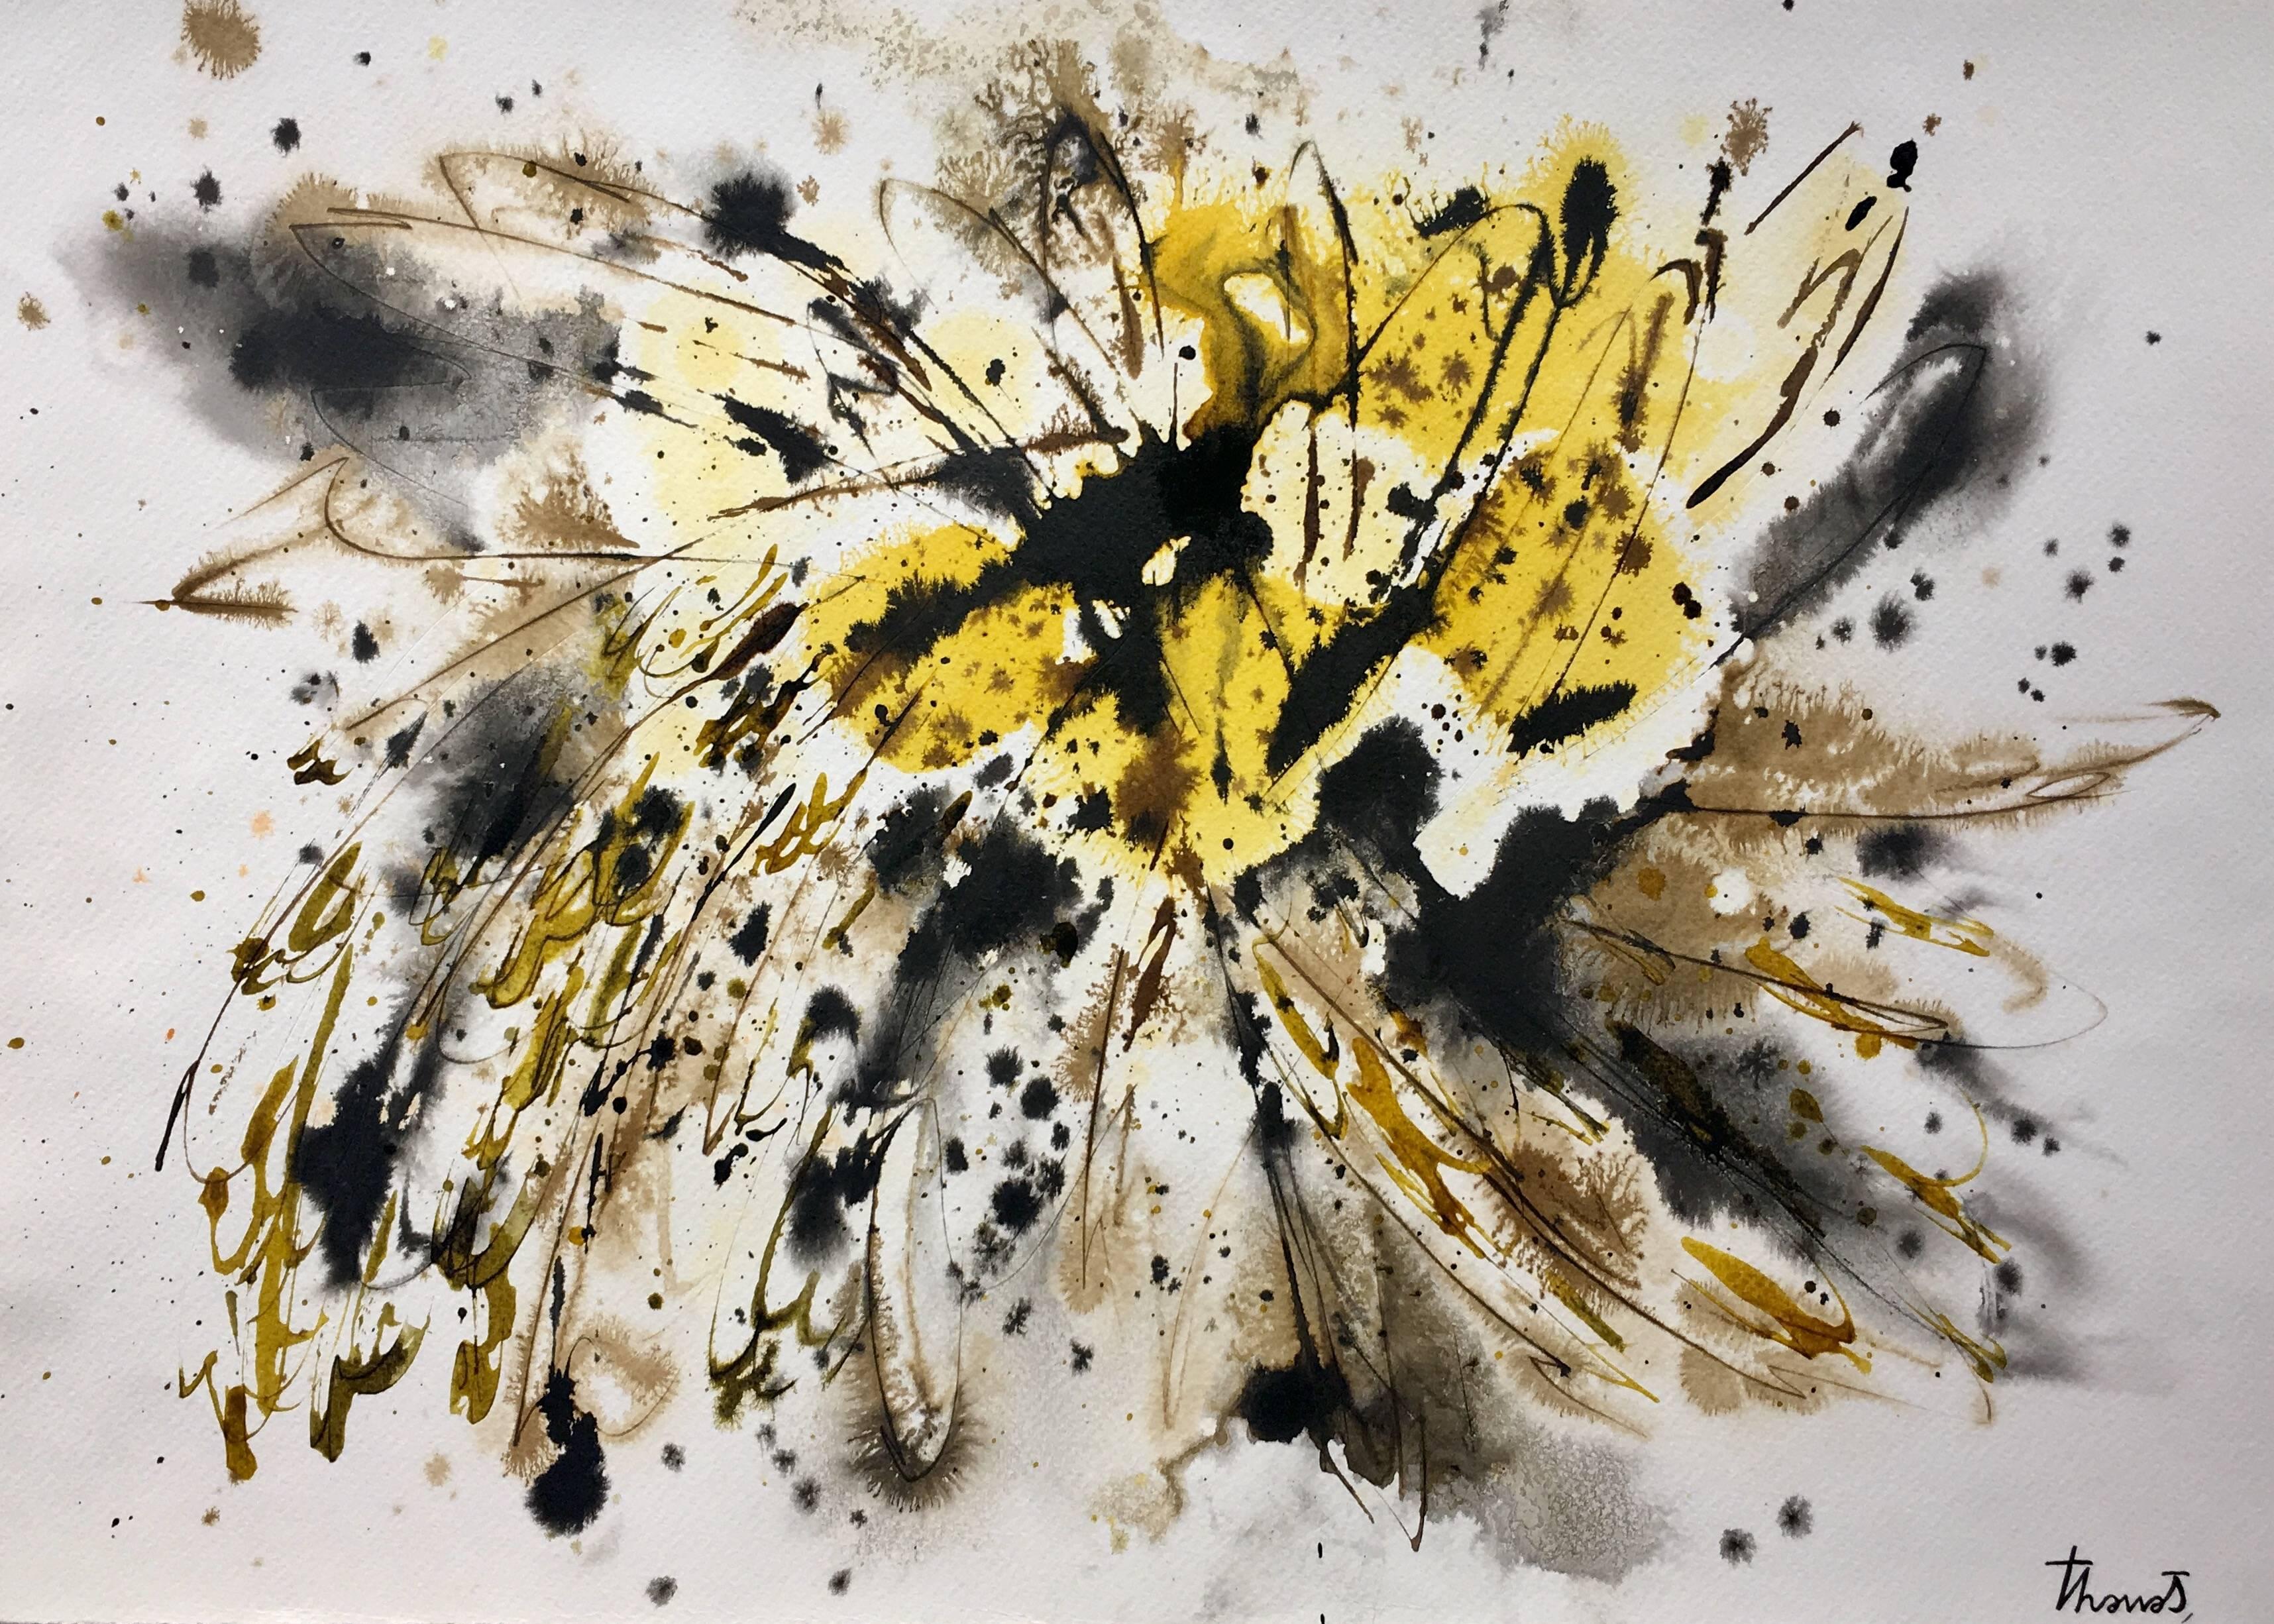 Tharrats  Black  Yellow  Golden  Original abstract acrylic on paper  - Painting by Josep THARRATS